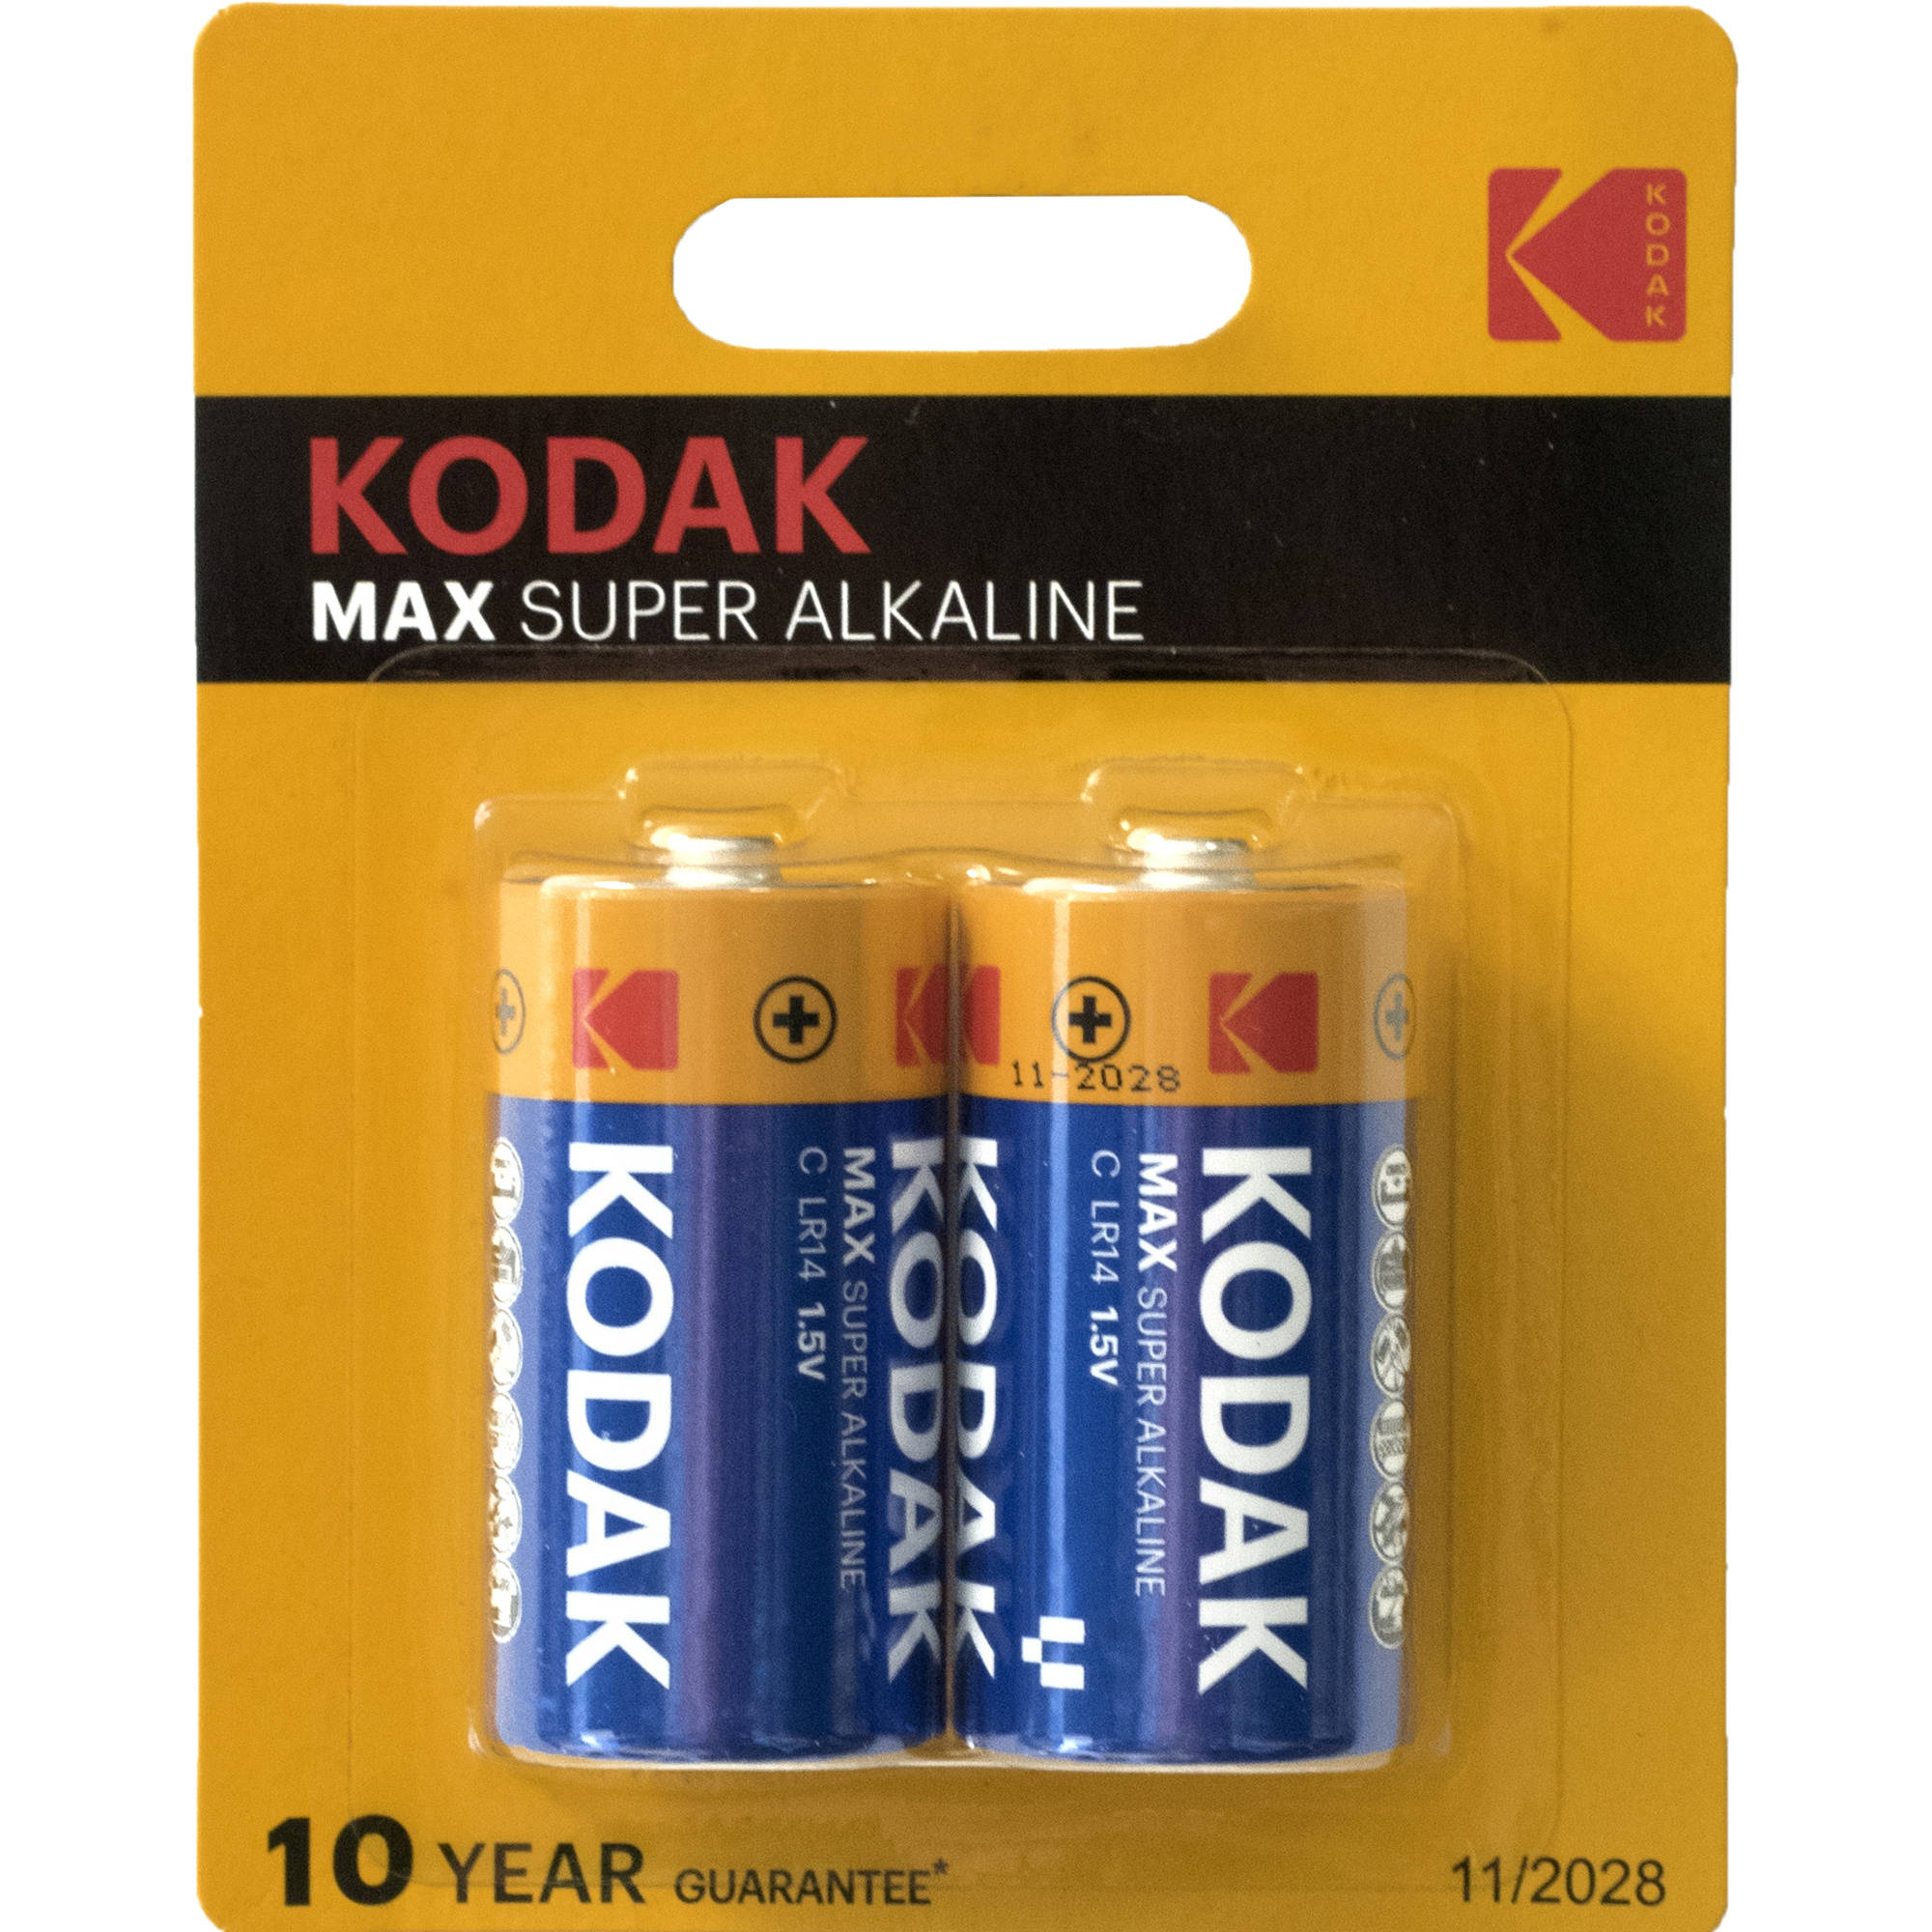 Kodak Max Kc 2 Alkaline C Battery 2 Pack B H Photo